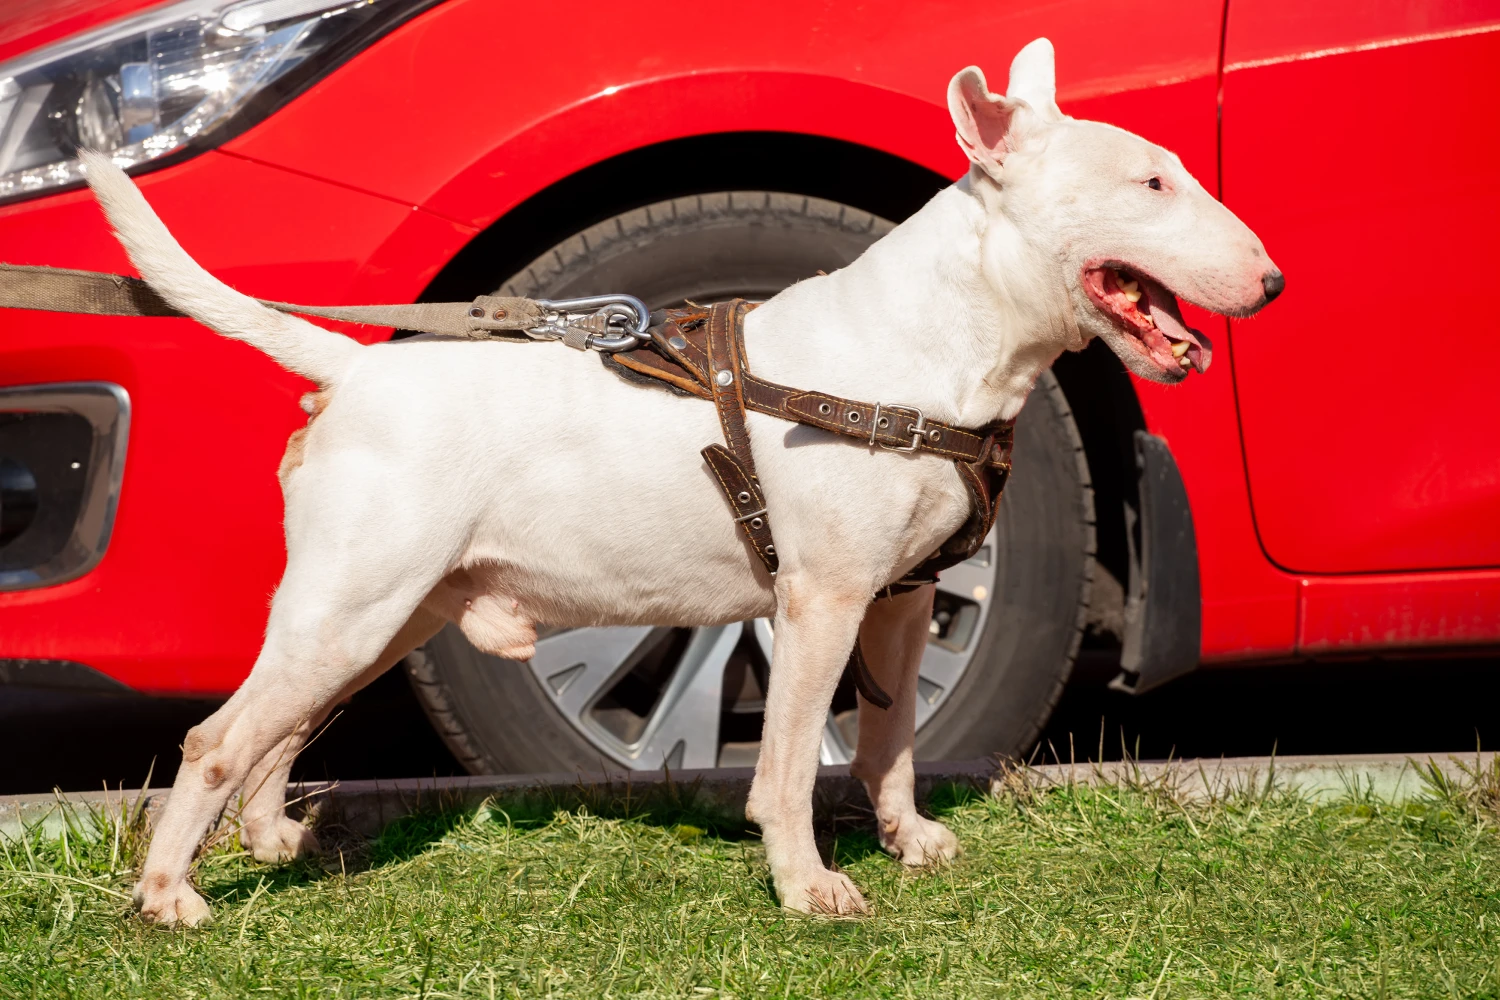 Mercedes-Benz GLC Dog Car Seat Belt for Bull Terriers